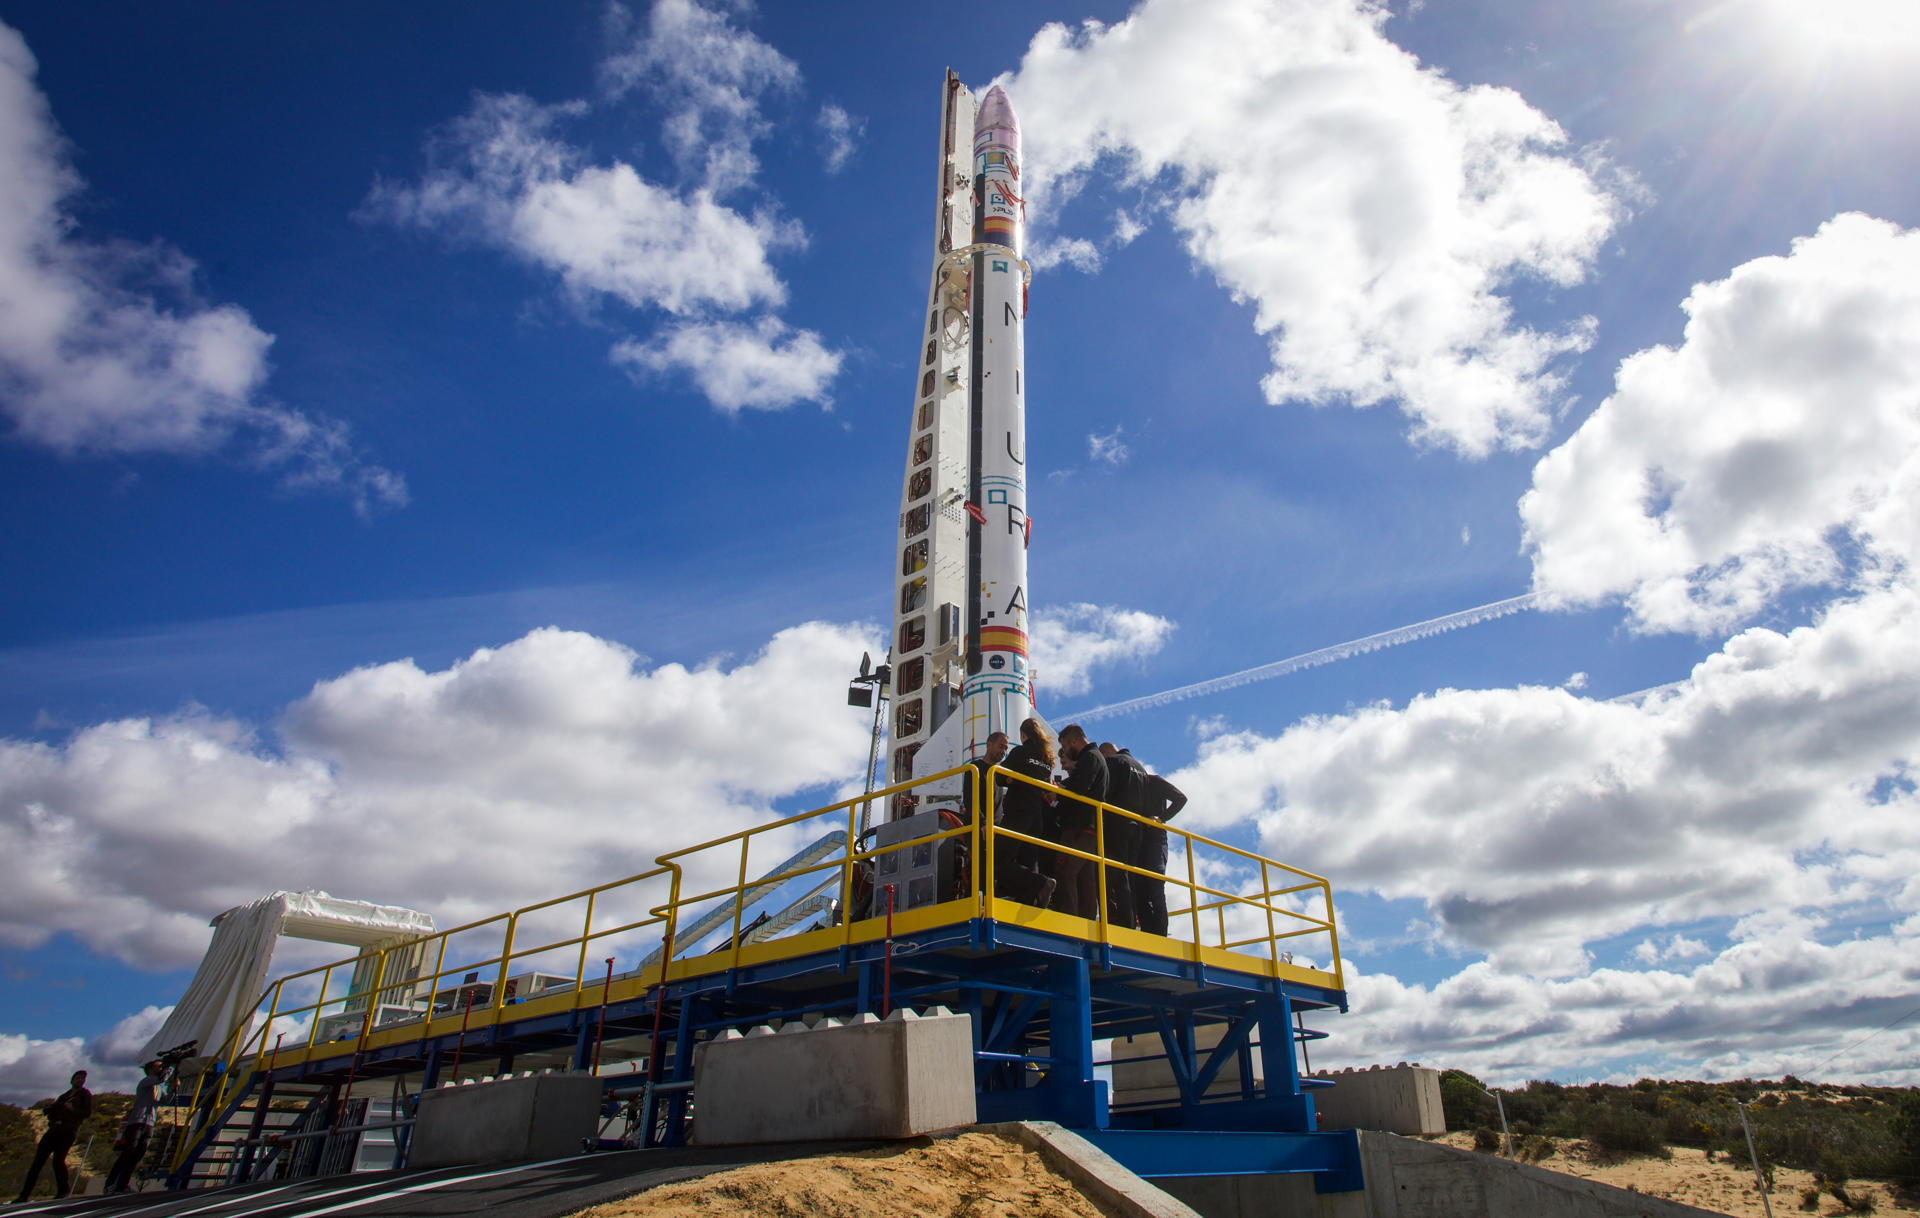 Launch platform of the first European private rocket, Miura 1, at the INTA facilities in El Arenosillo (CEDEA), located in Mazagón, Huelva, Spain on Mar. 11, 2023. EFE/Julián Pérez